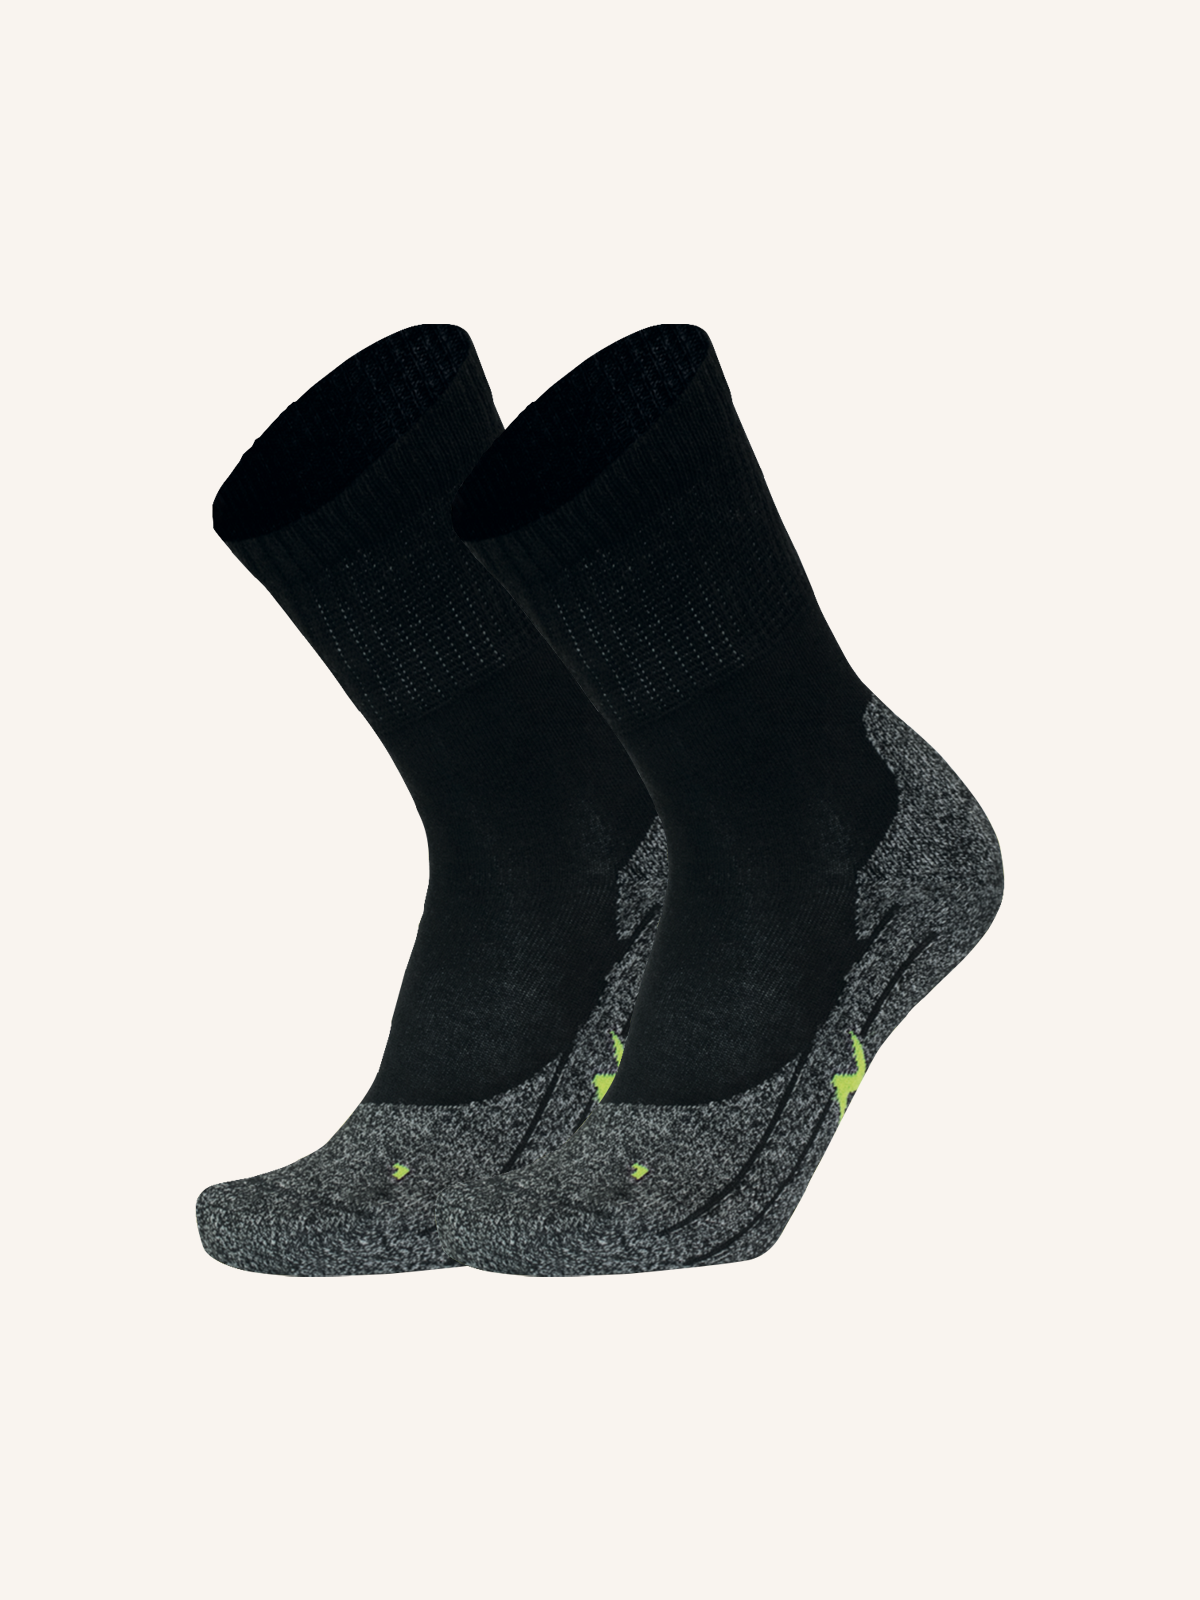 Long Cotton Socks for Men for Trekking | Plain Color | Pack of 2 Pairs | PRS PRO 04